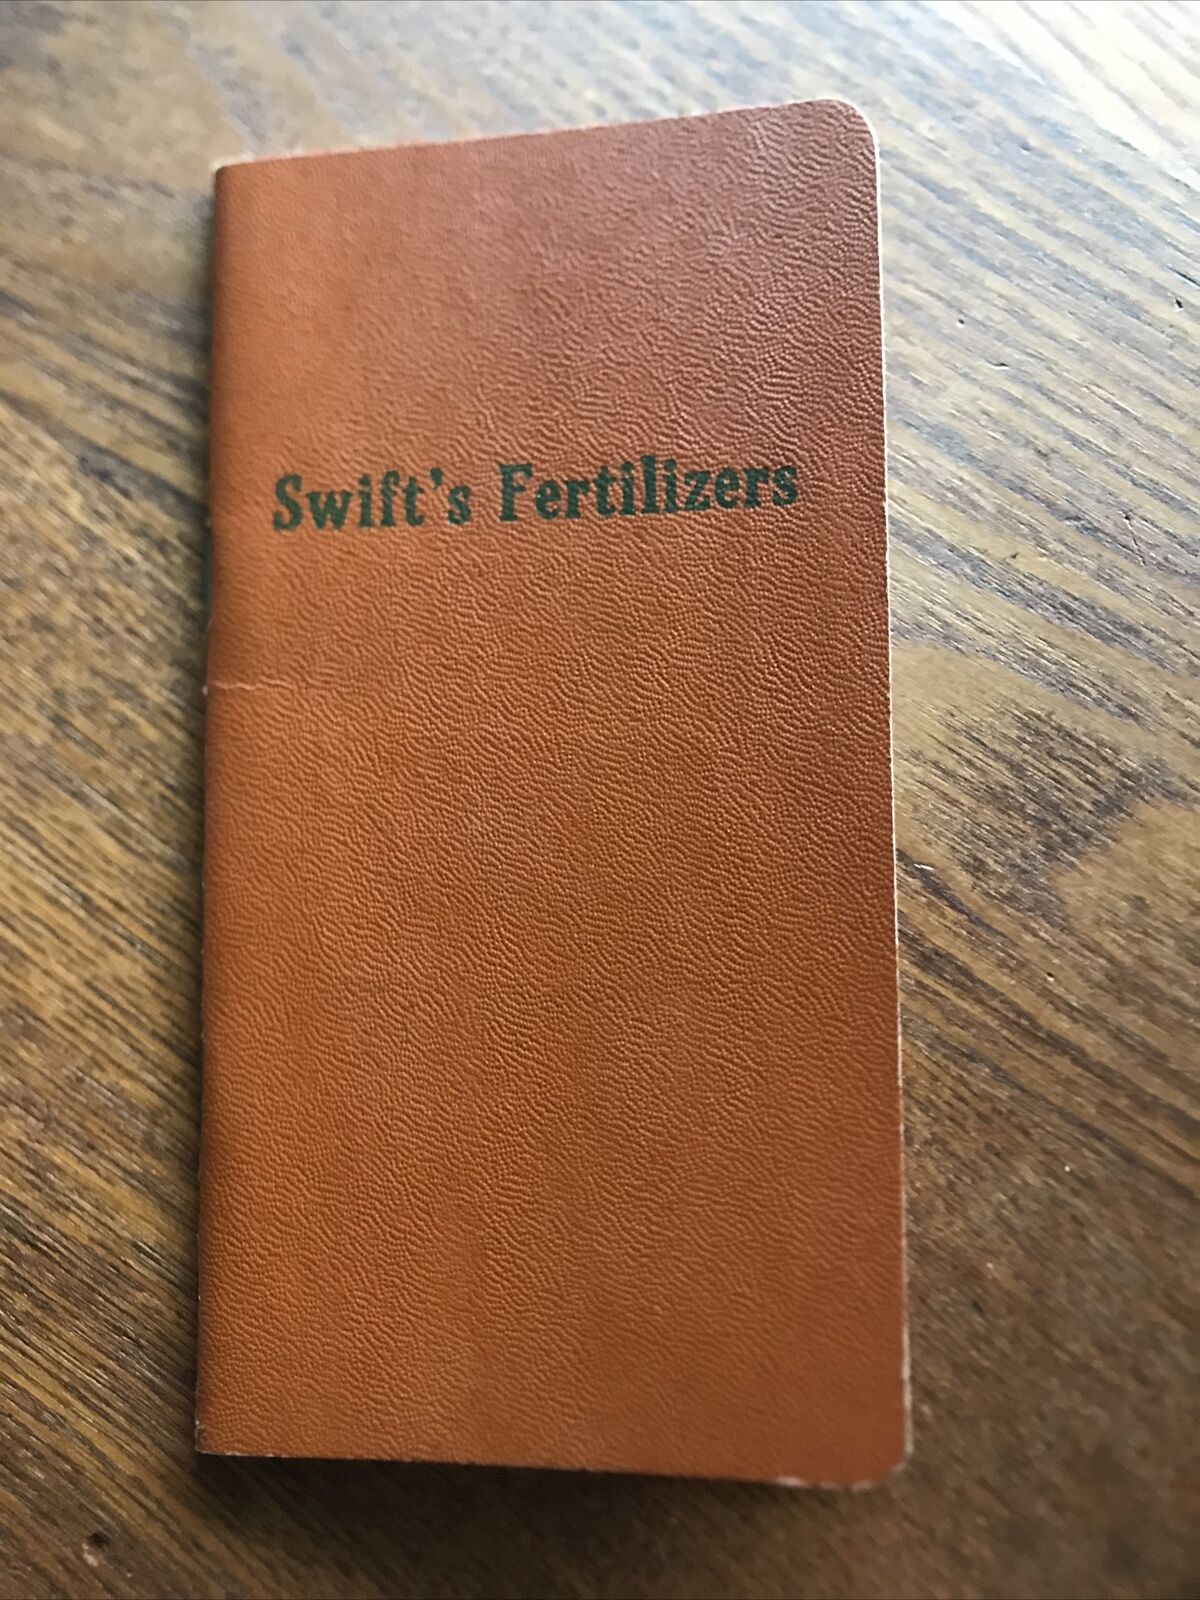 RARE 1916 CALENDAR BOOK VINTAGE SWIFT\'S FERTILIZERS POCKET BOOKLET FARMER FARM